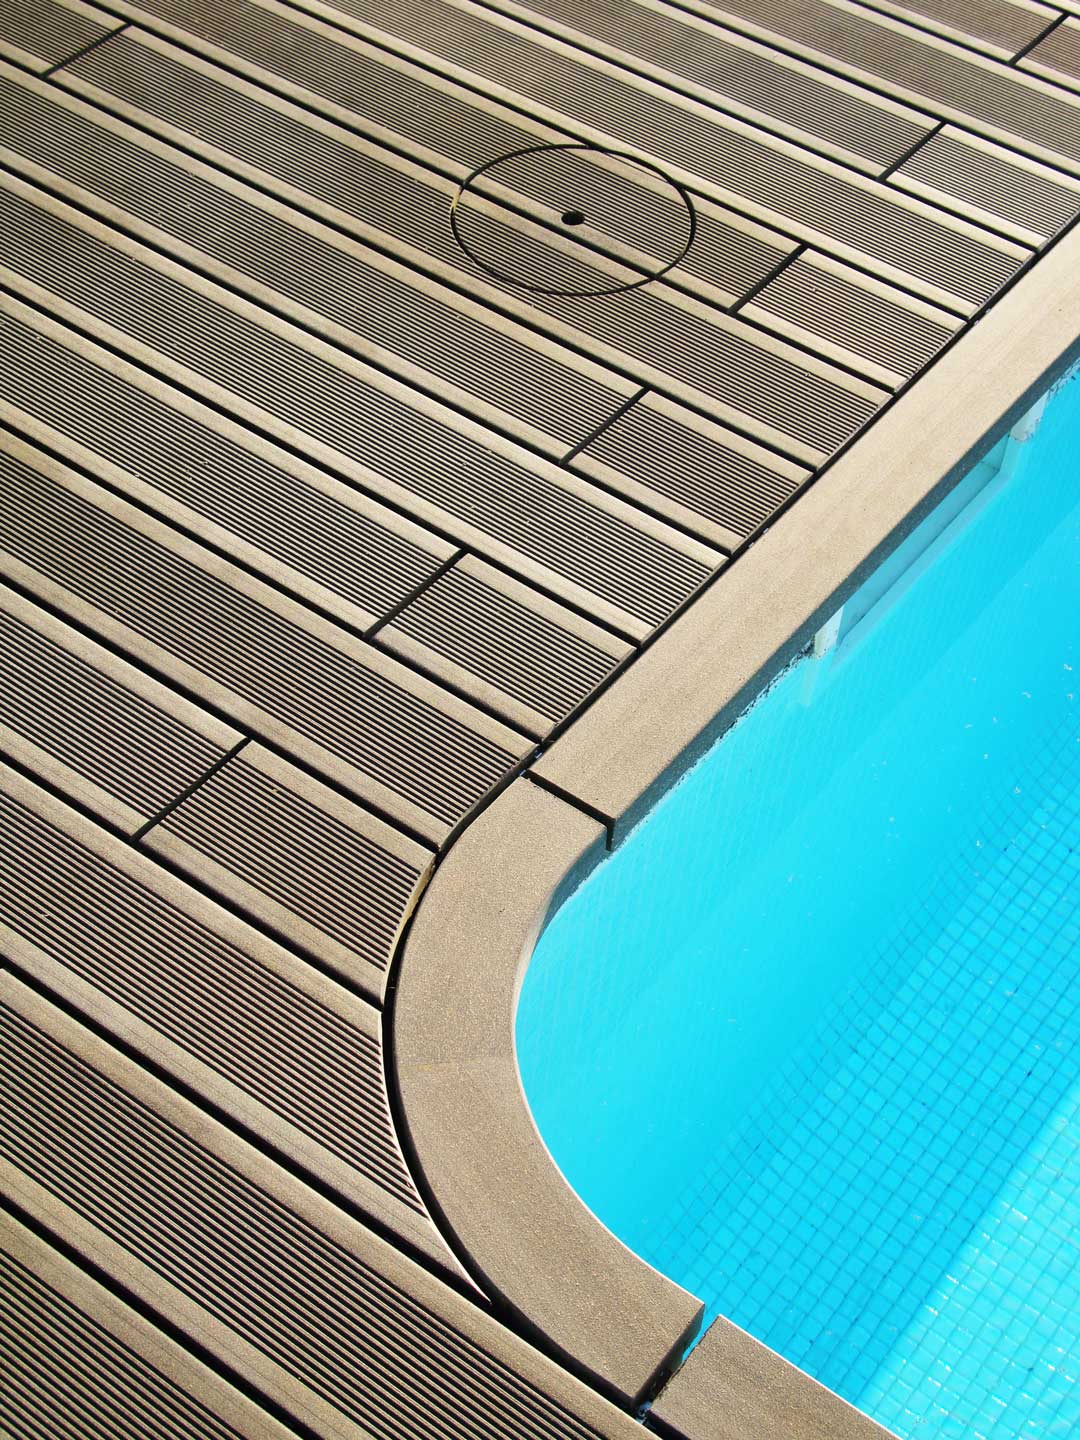 VISENDUM piscinas con curvas de exterior madera tecnologica